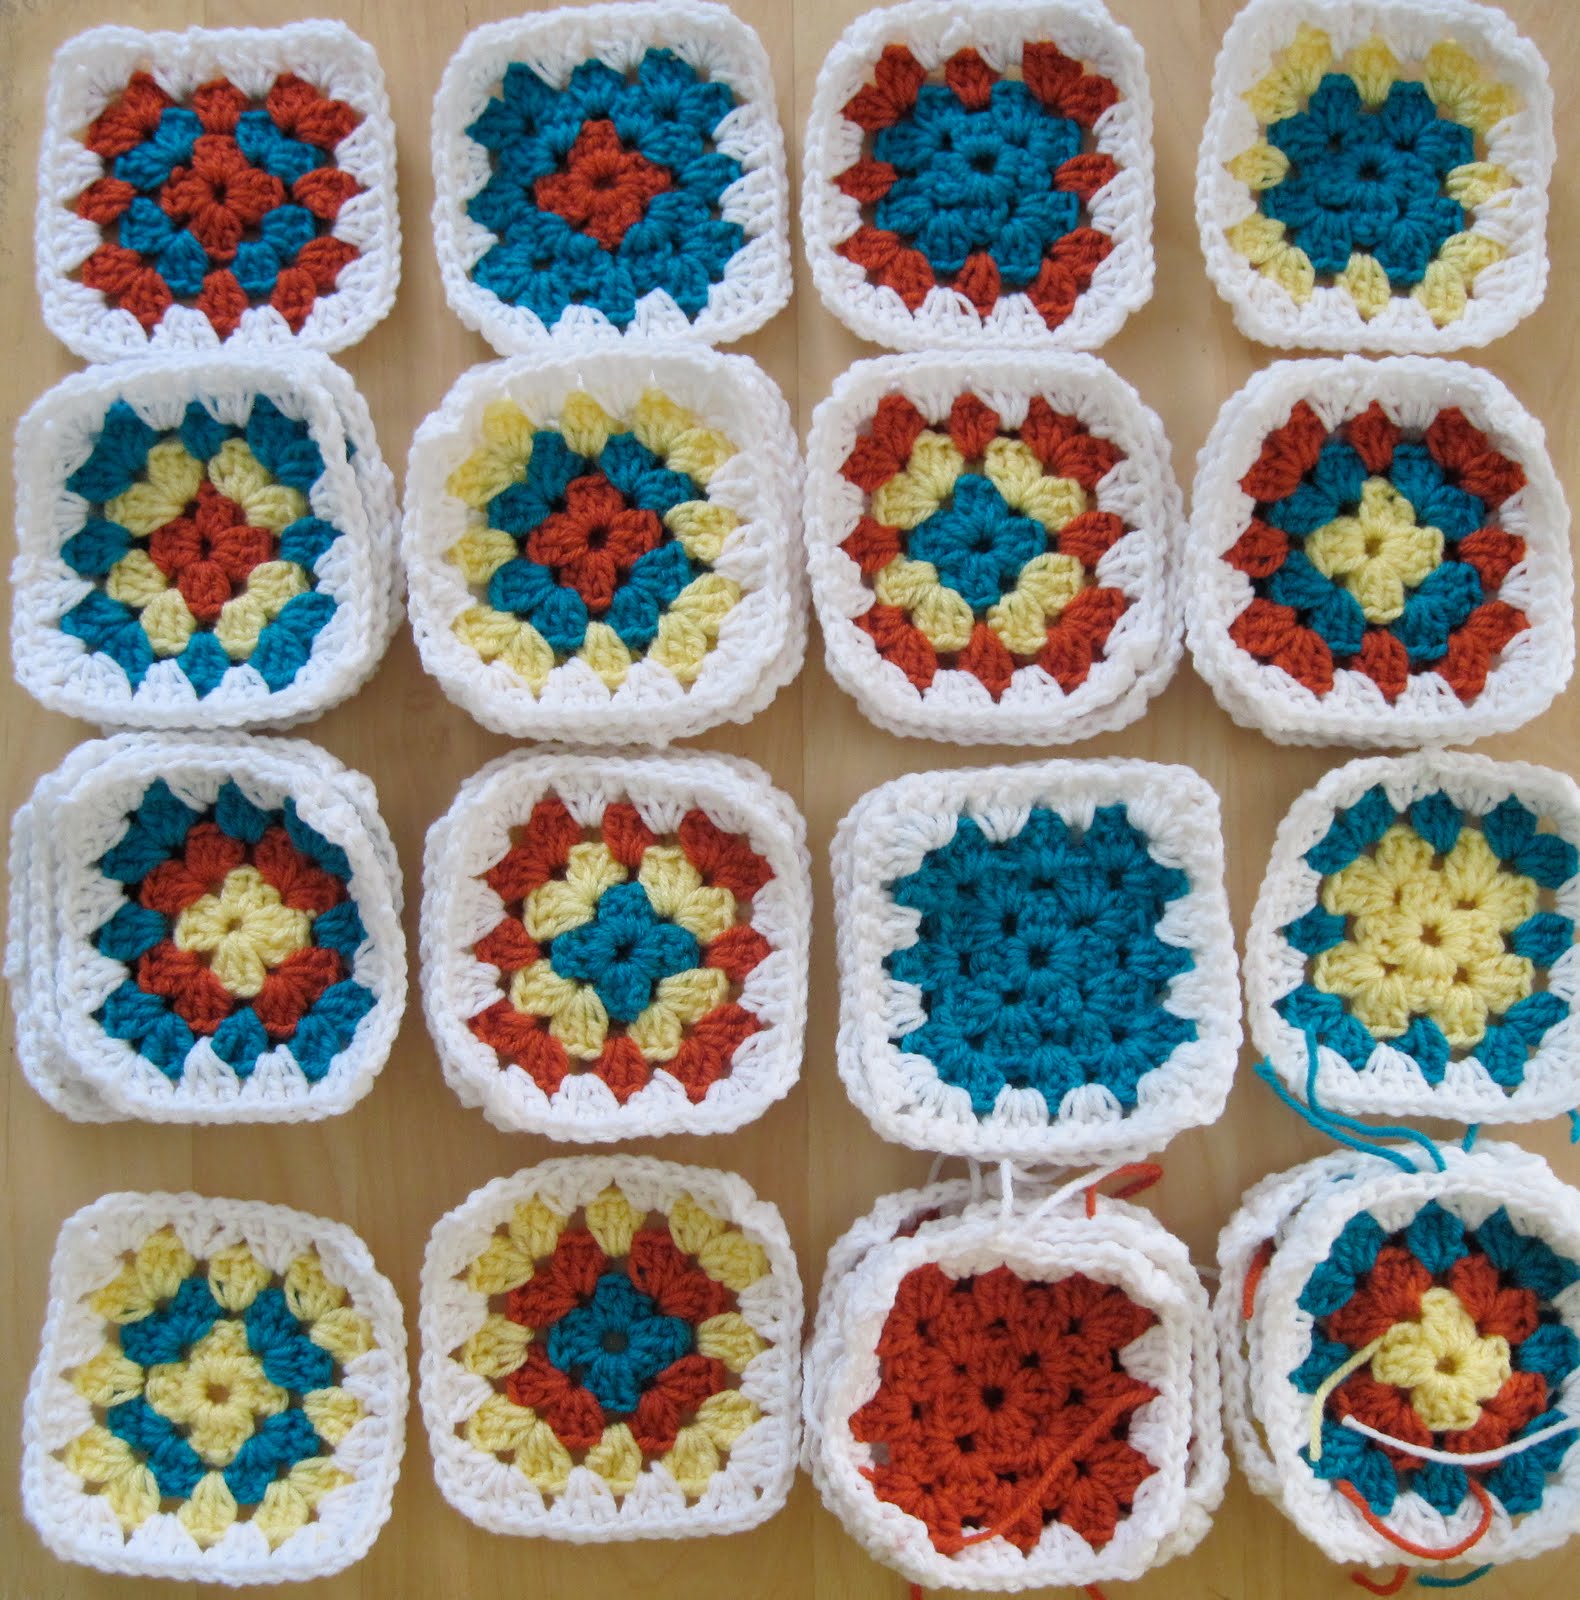 Granny Square Crochet Afghan Pattern | FaveCrafts.com